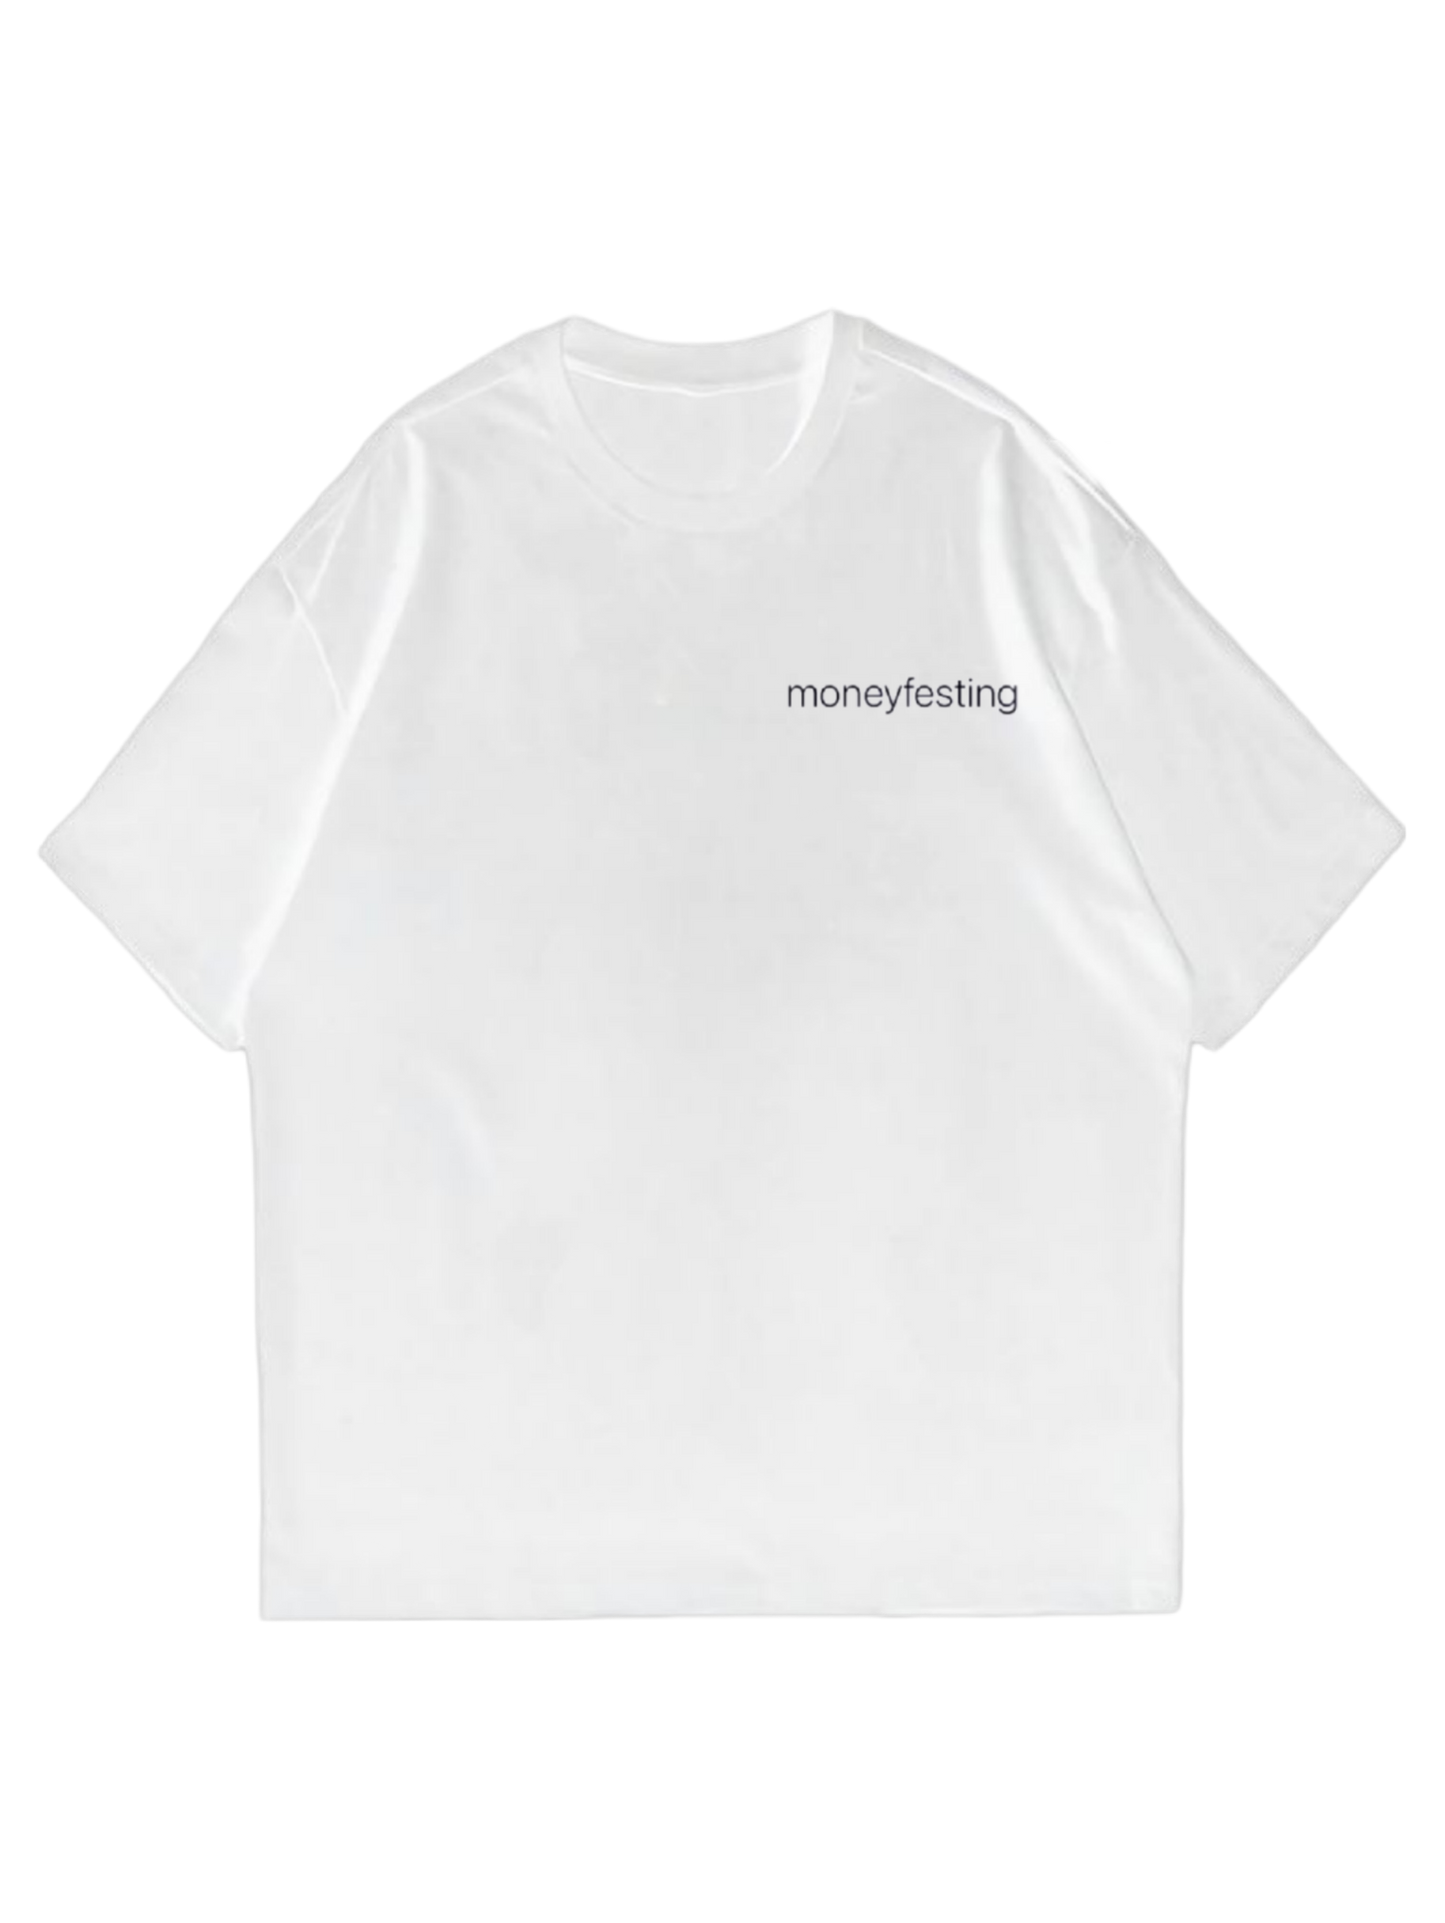 'Moneyfesting' logo tee